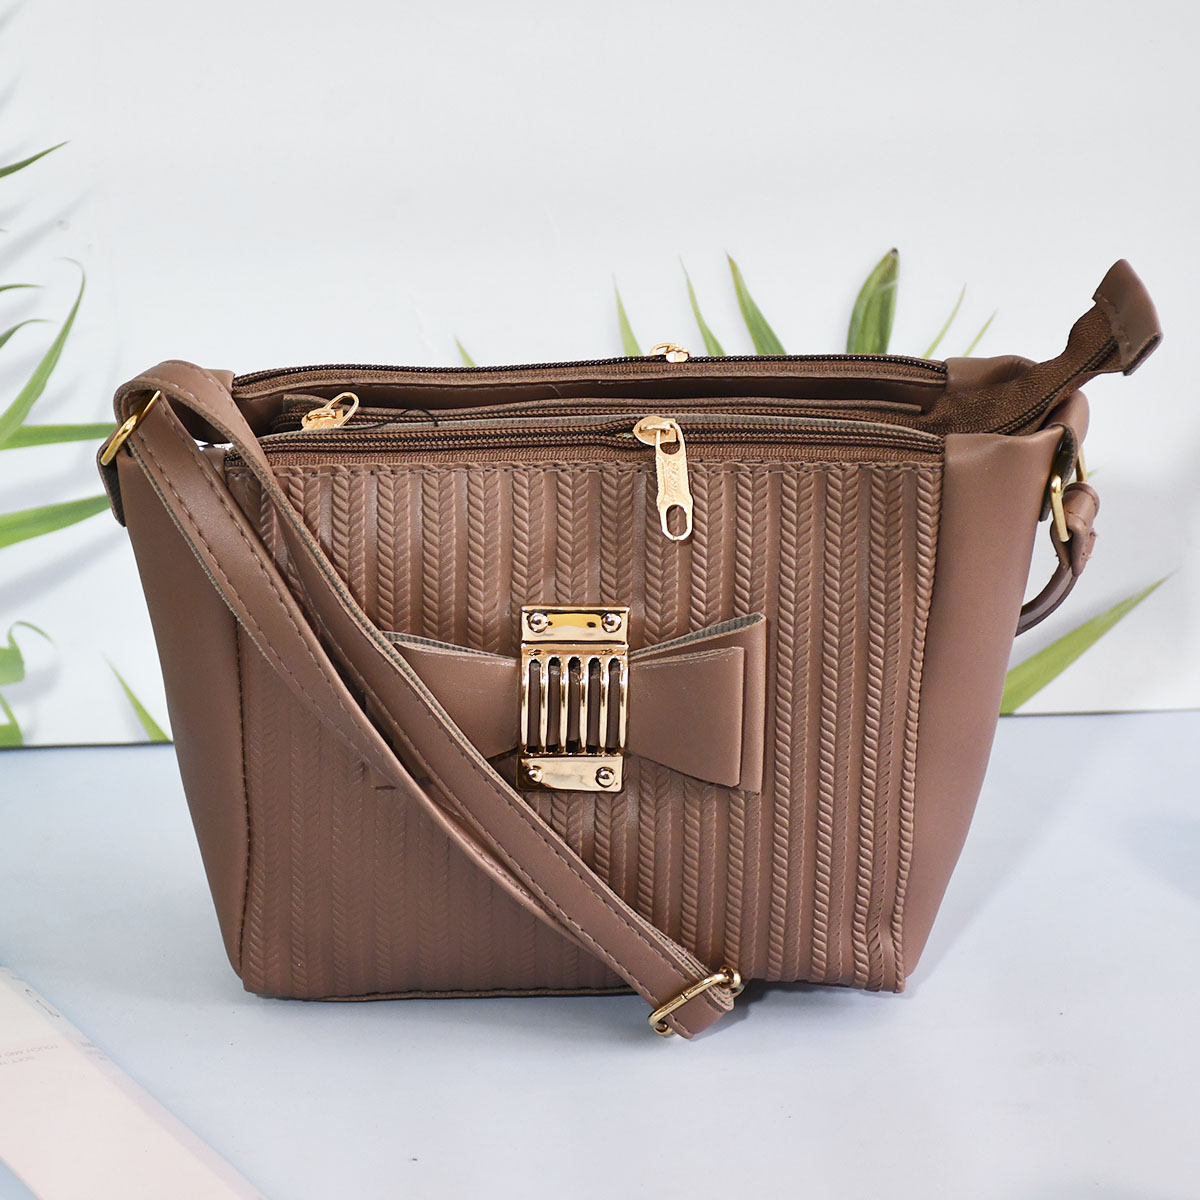 Kritika Bag Collection Beautiful Handbag For Girls And Women, College bag  For Girls, Stylish Women Office